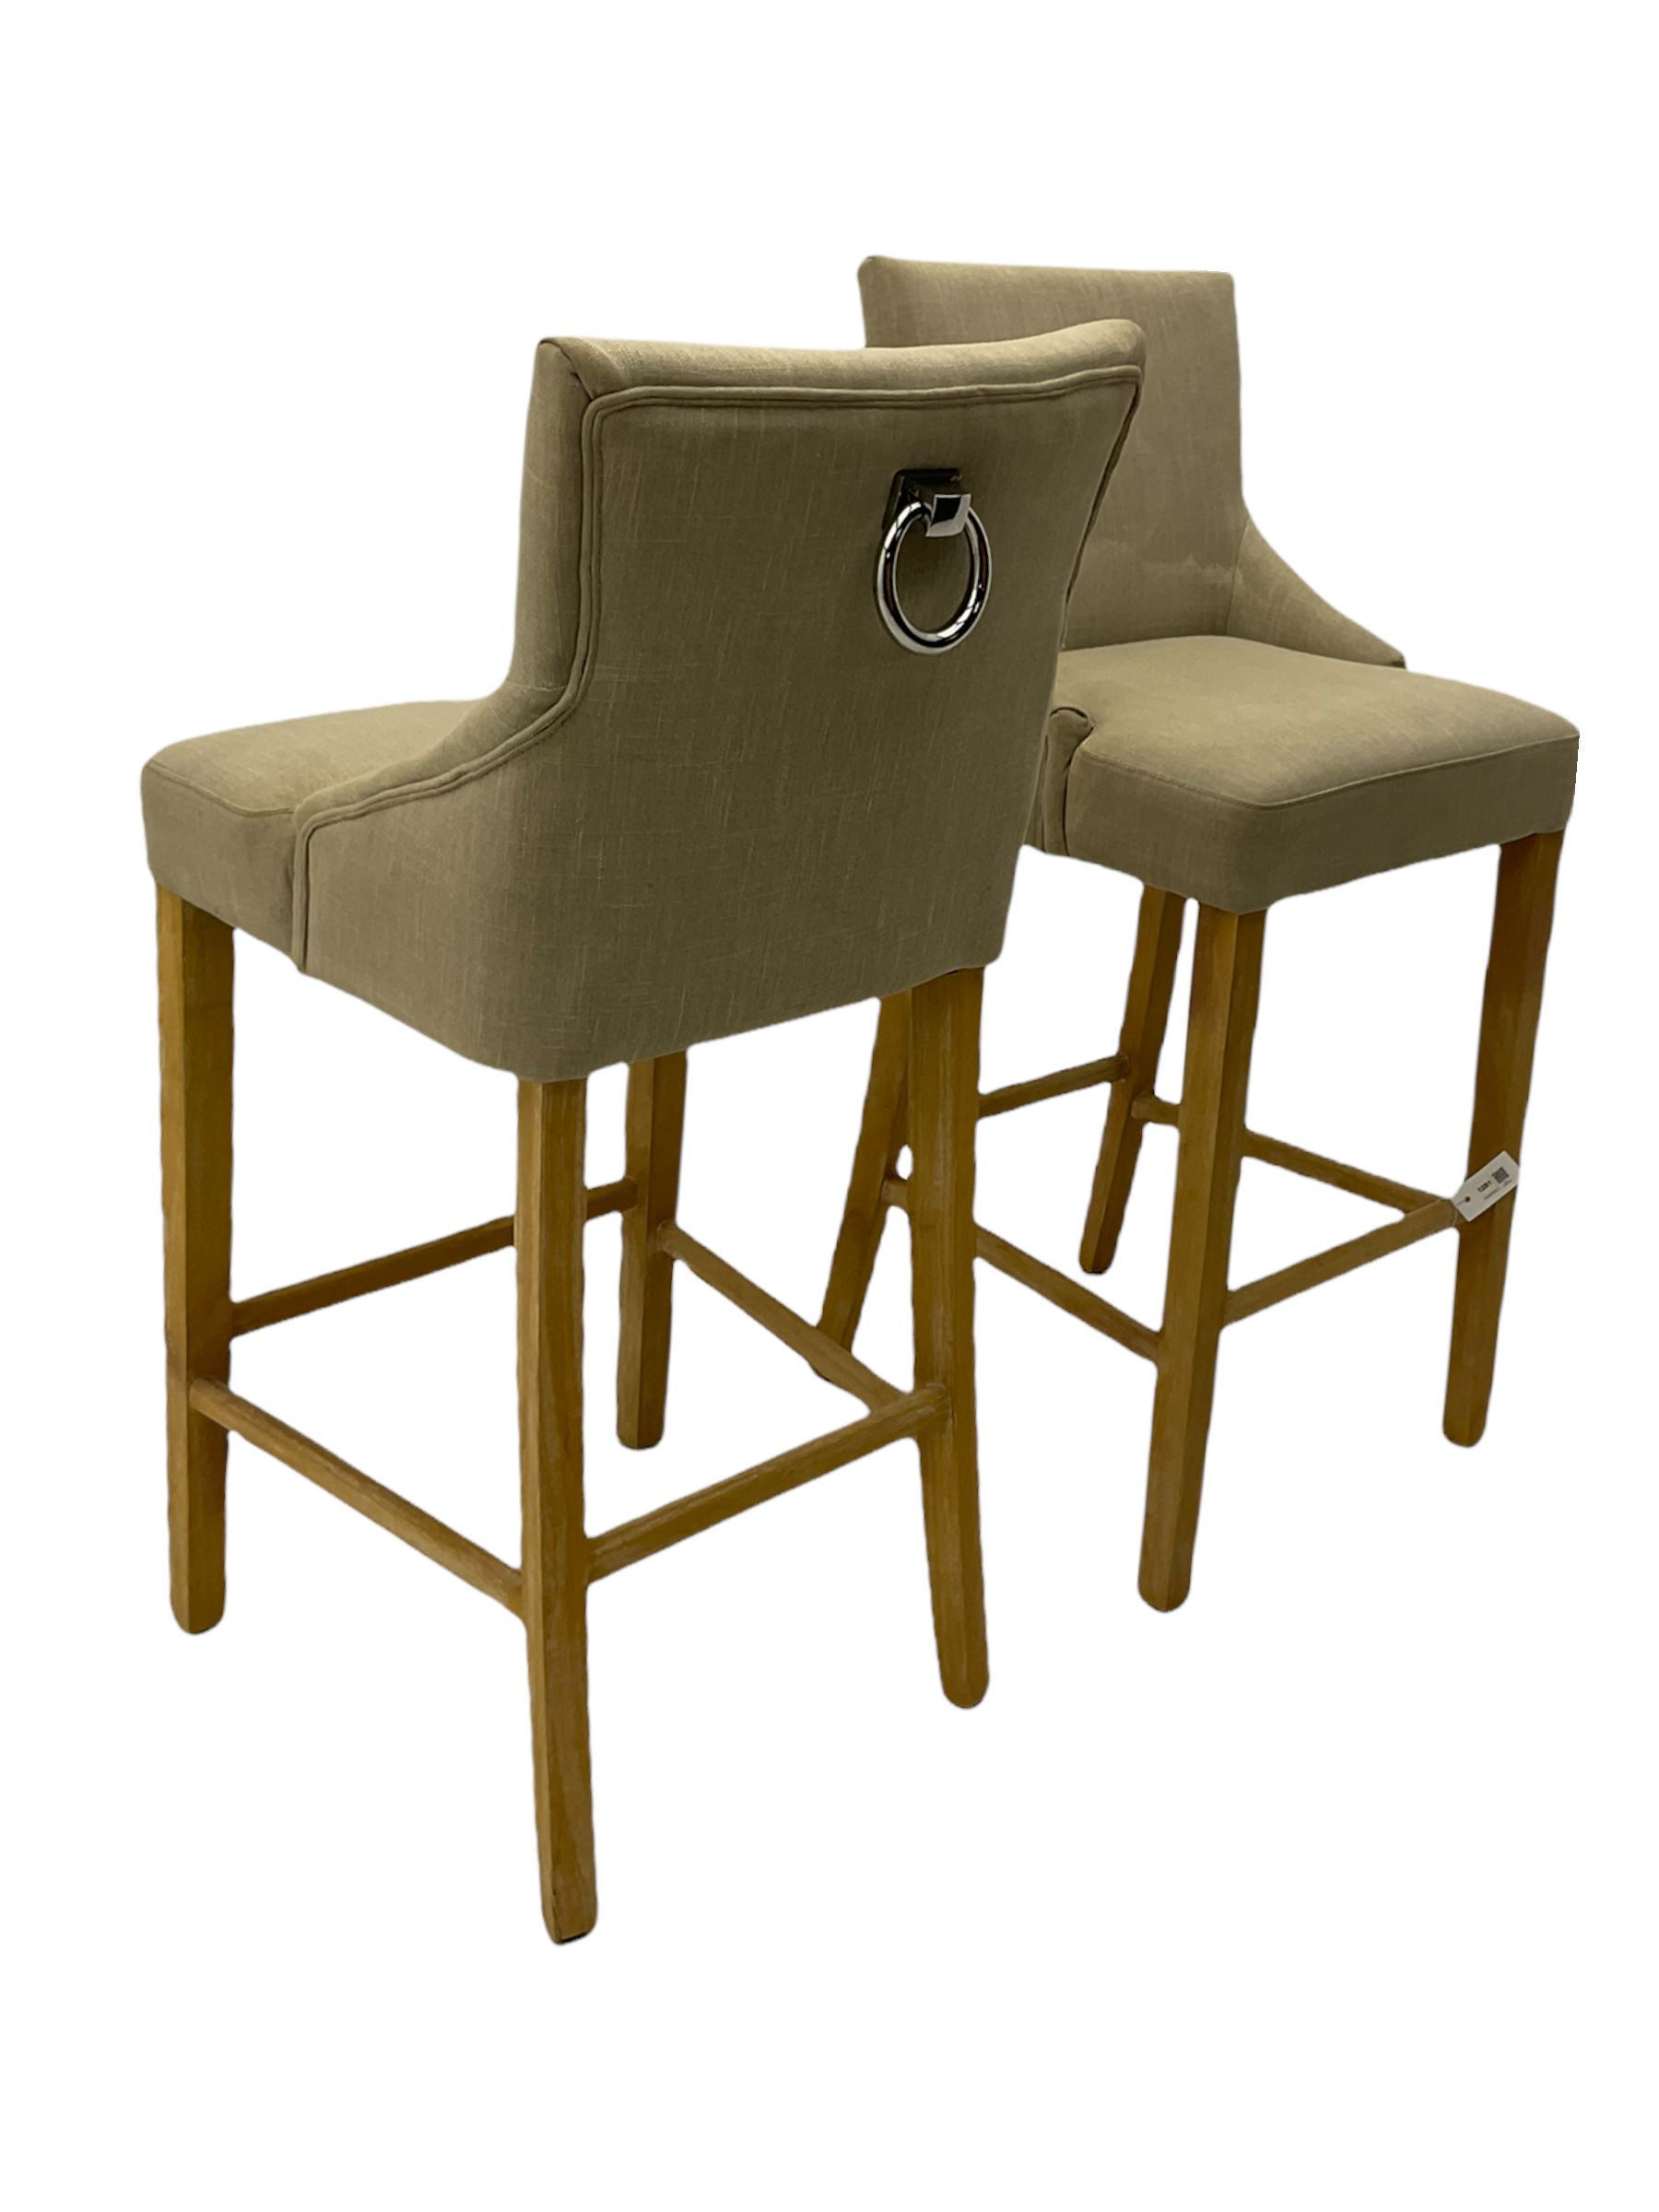 Pair of light oak bar stools - Image 4 of 12